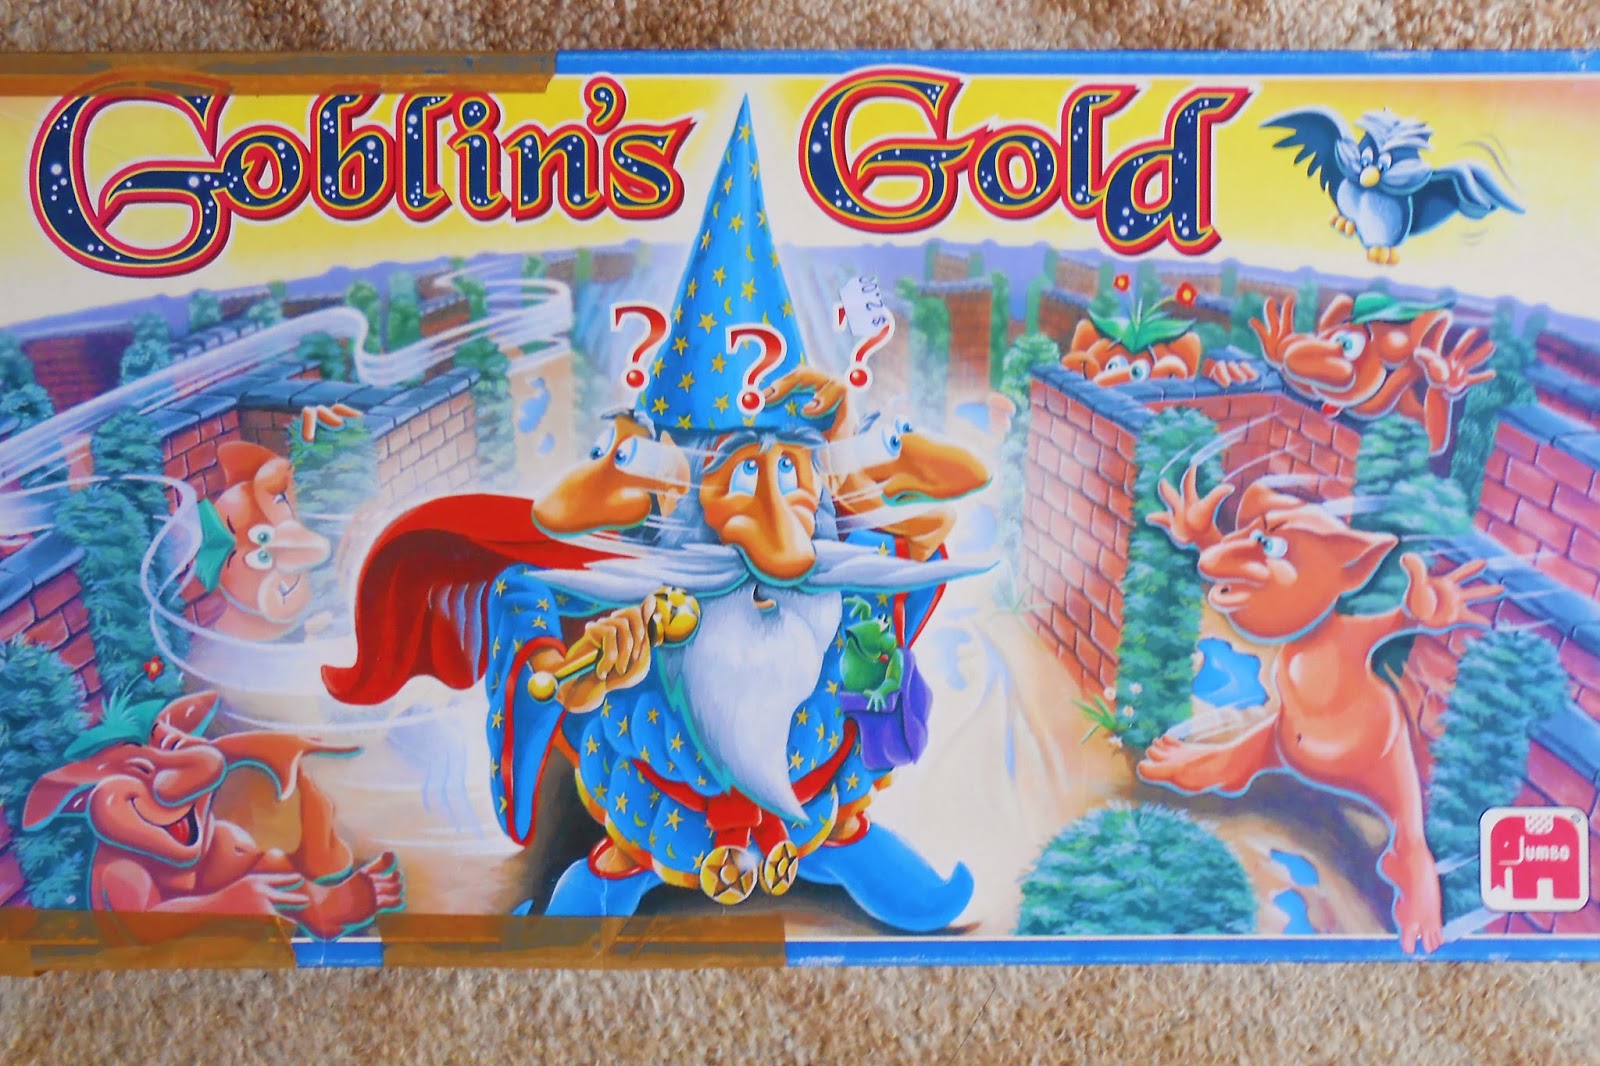 go-figure-goblin-s-gold-gold